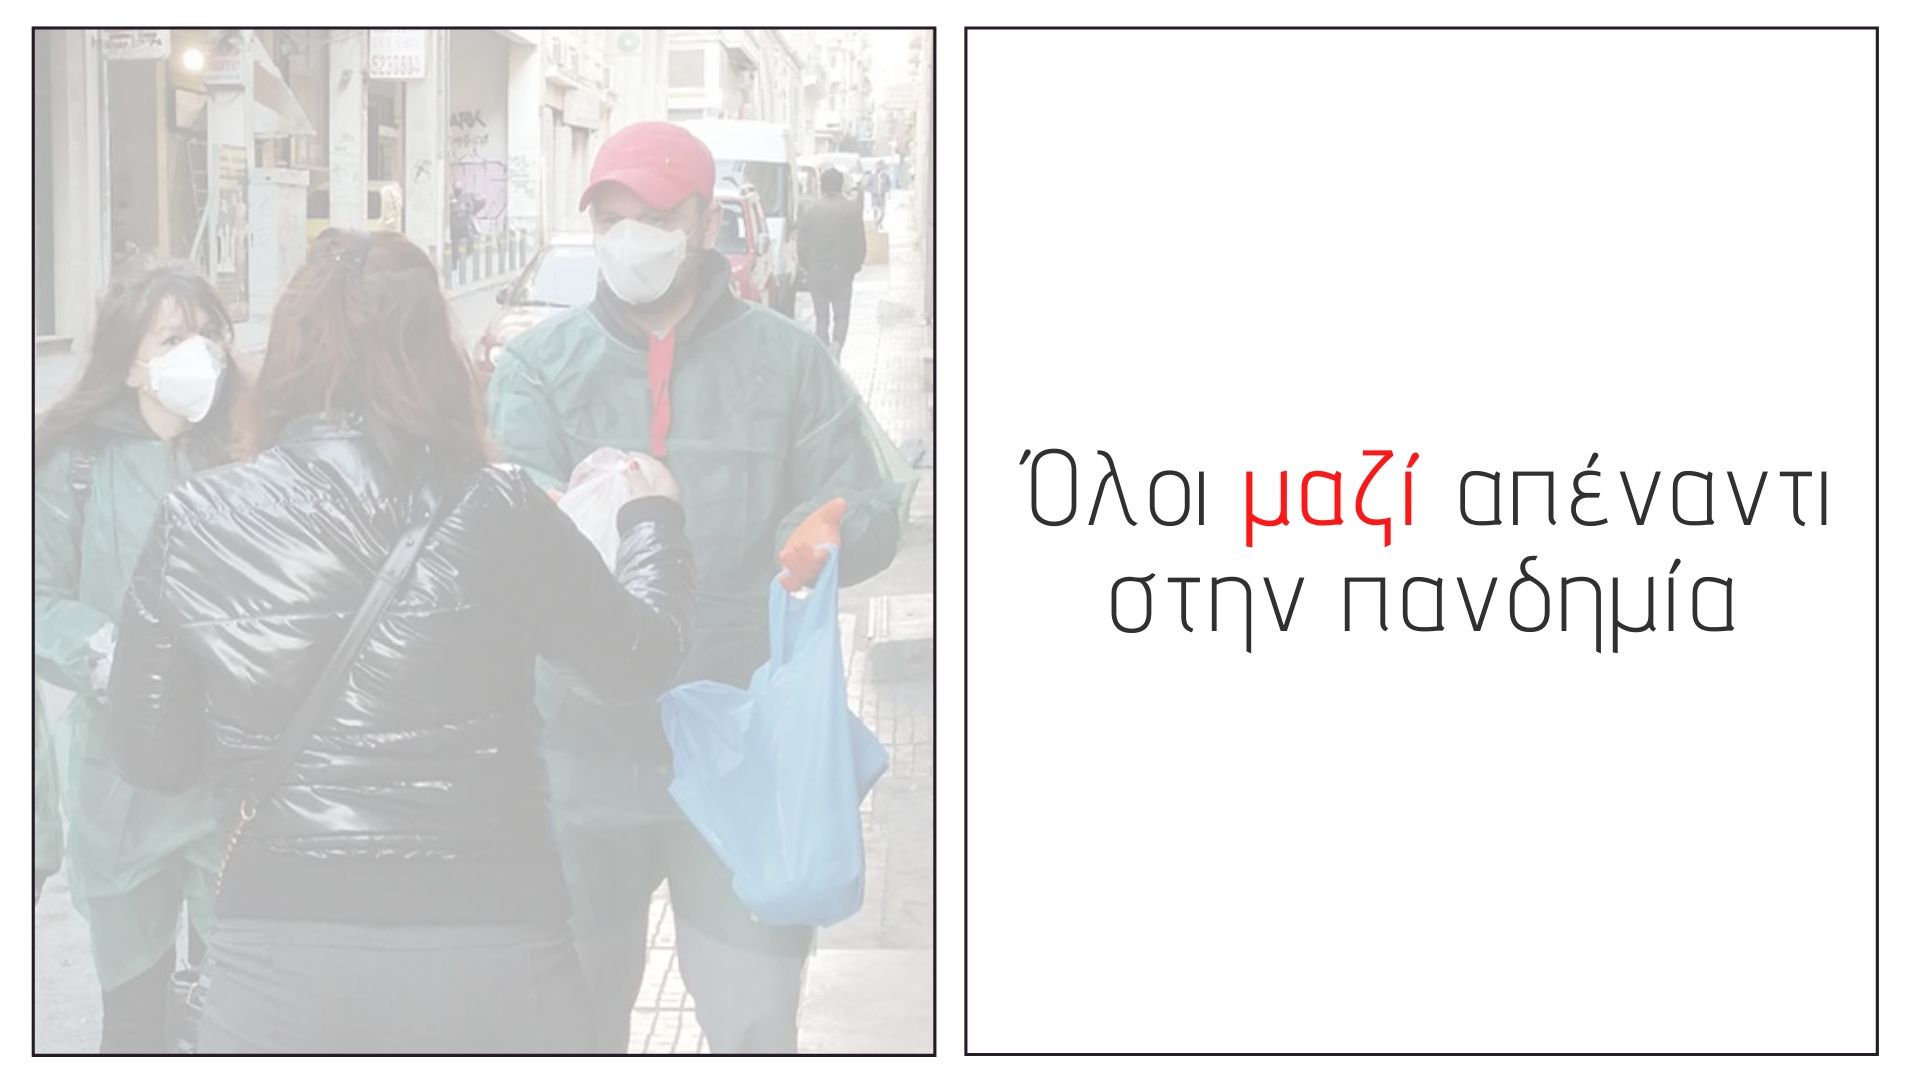 Featured image for “Συνεργασία της Θετικής Φωνής με τον Δήμο Αθηναίων, τον Προμηθέα και τον ΟΚΑΝΑ για την υποστήριξη των ευάλωτων ομάδων”